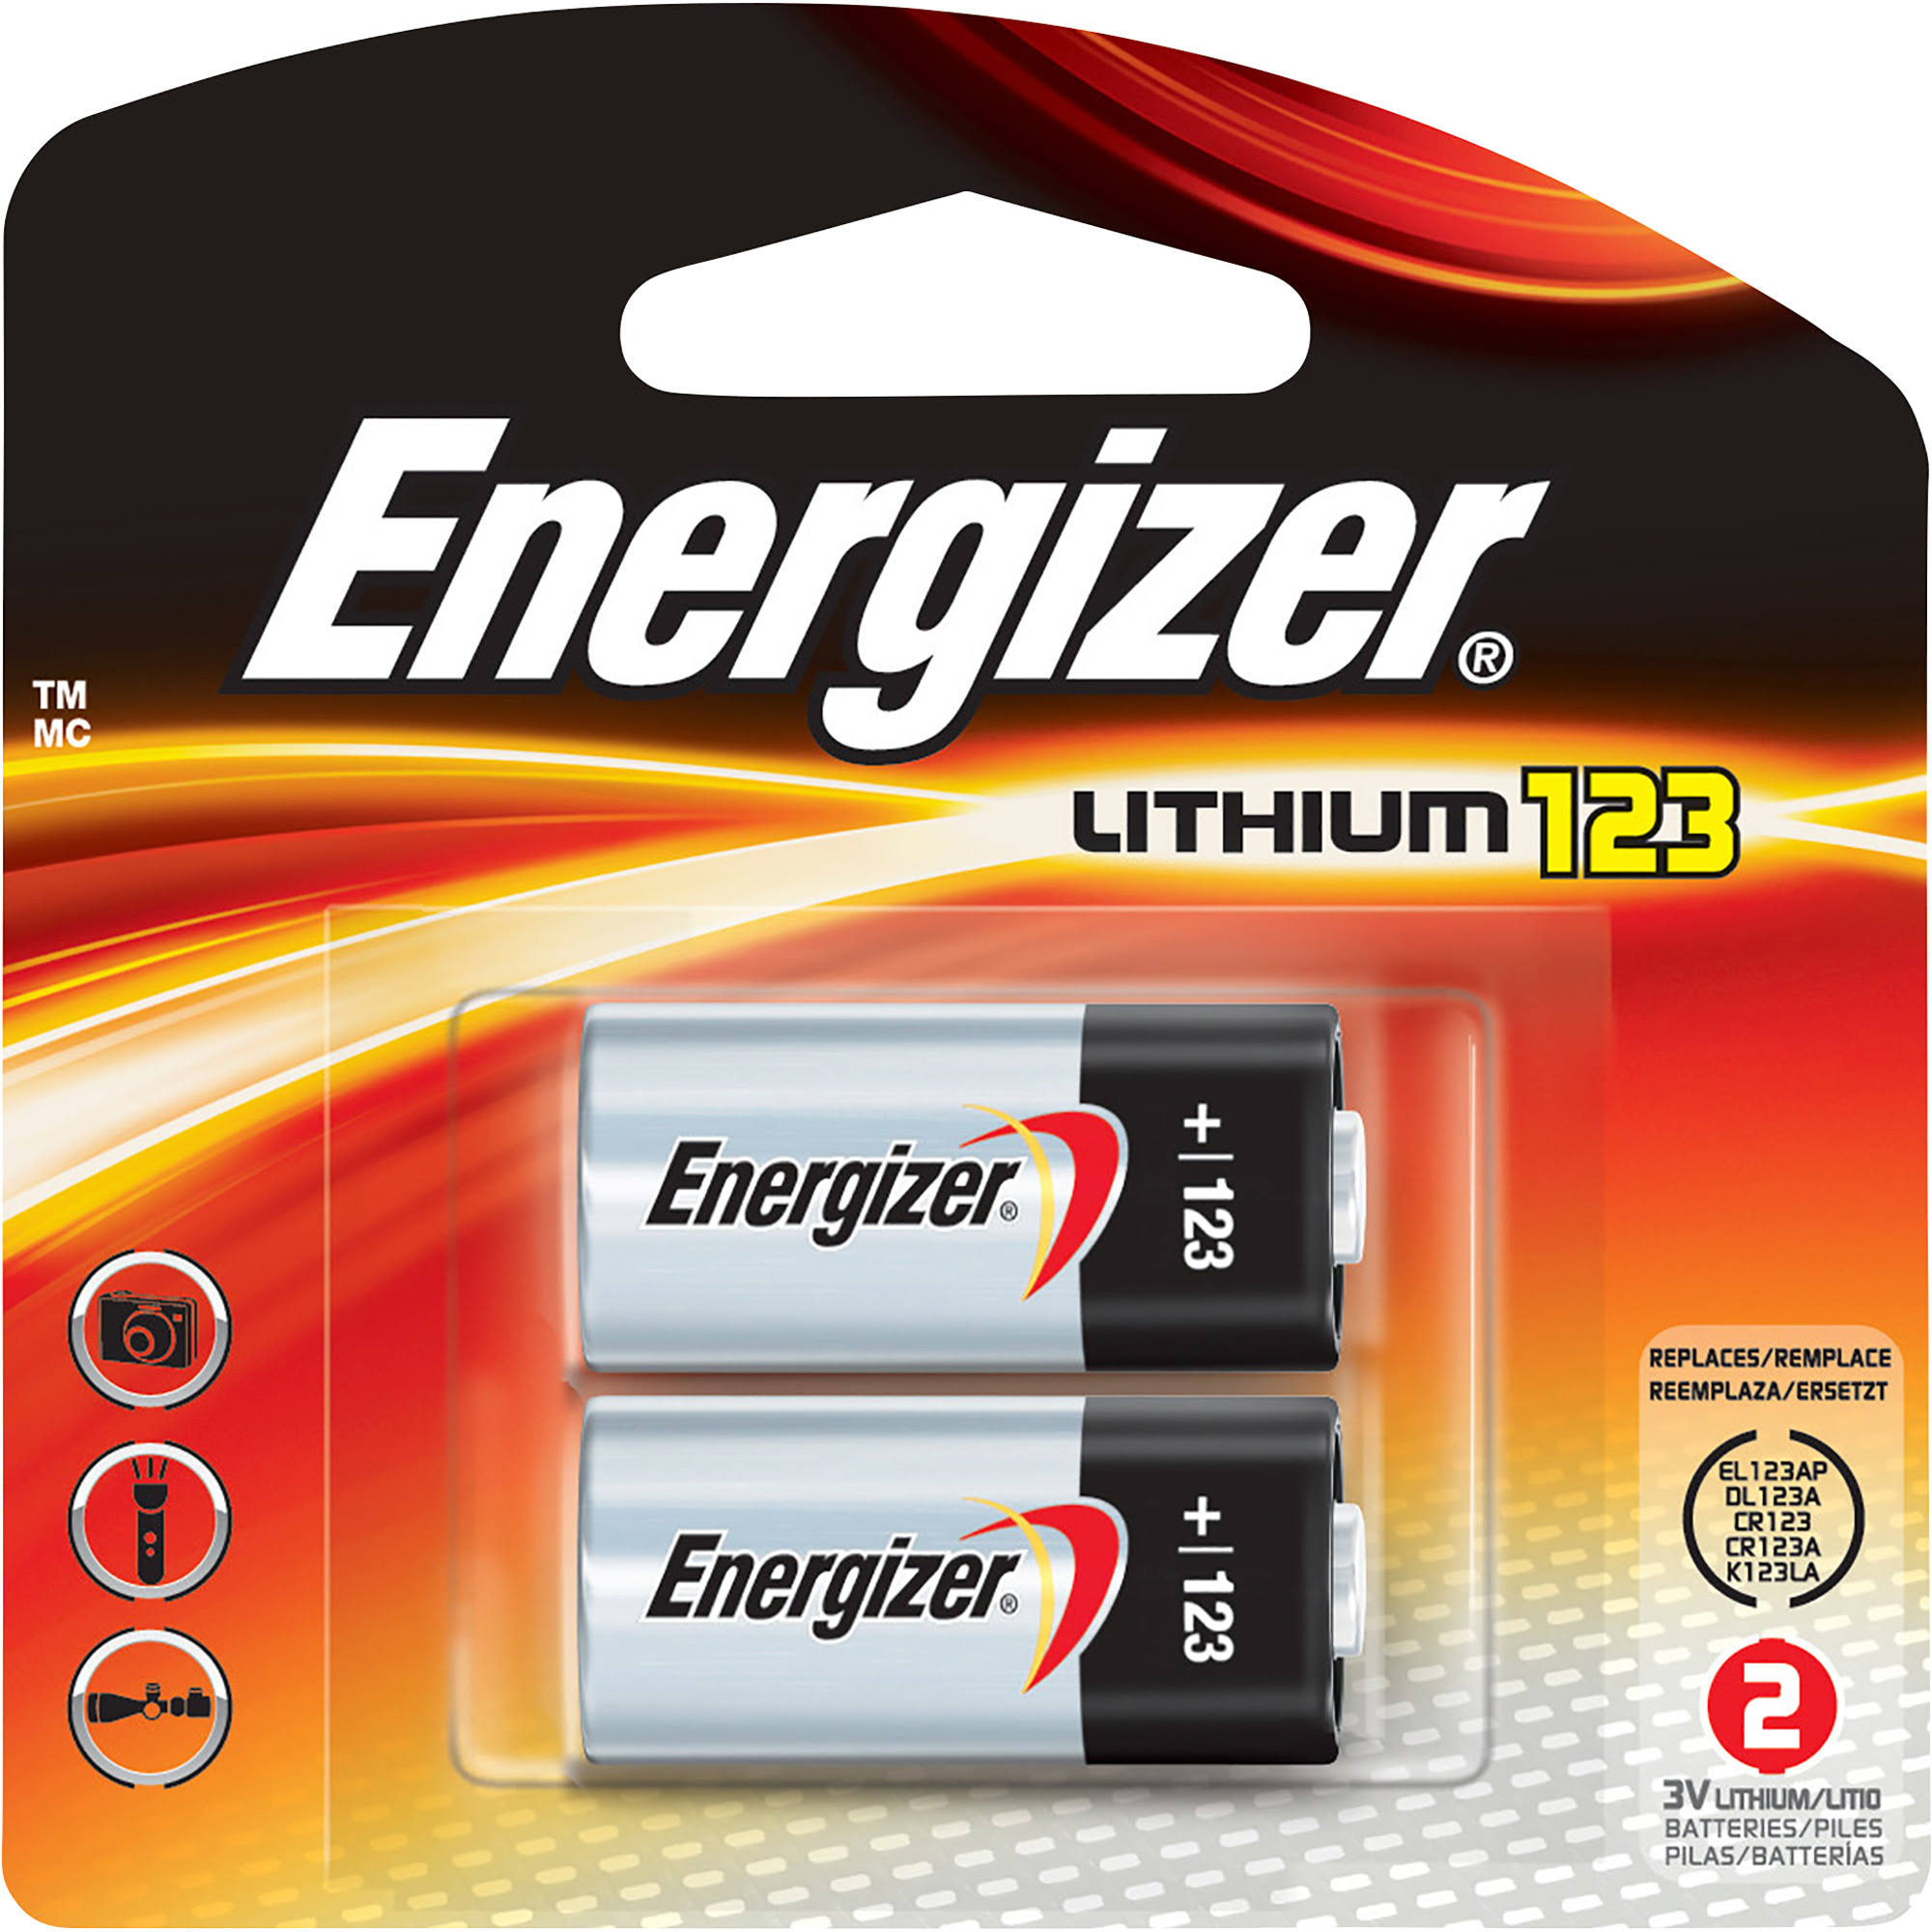 Energizer 123 Lithium Battery - 3V, x2